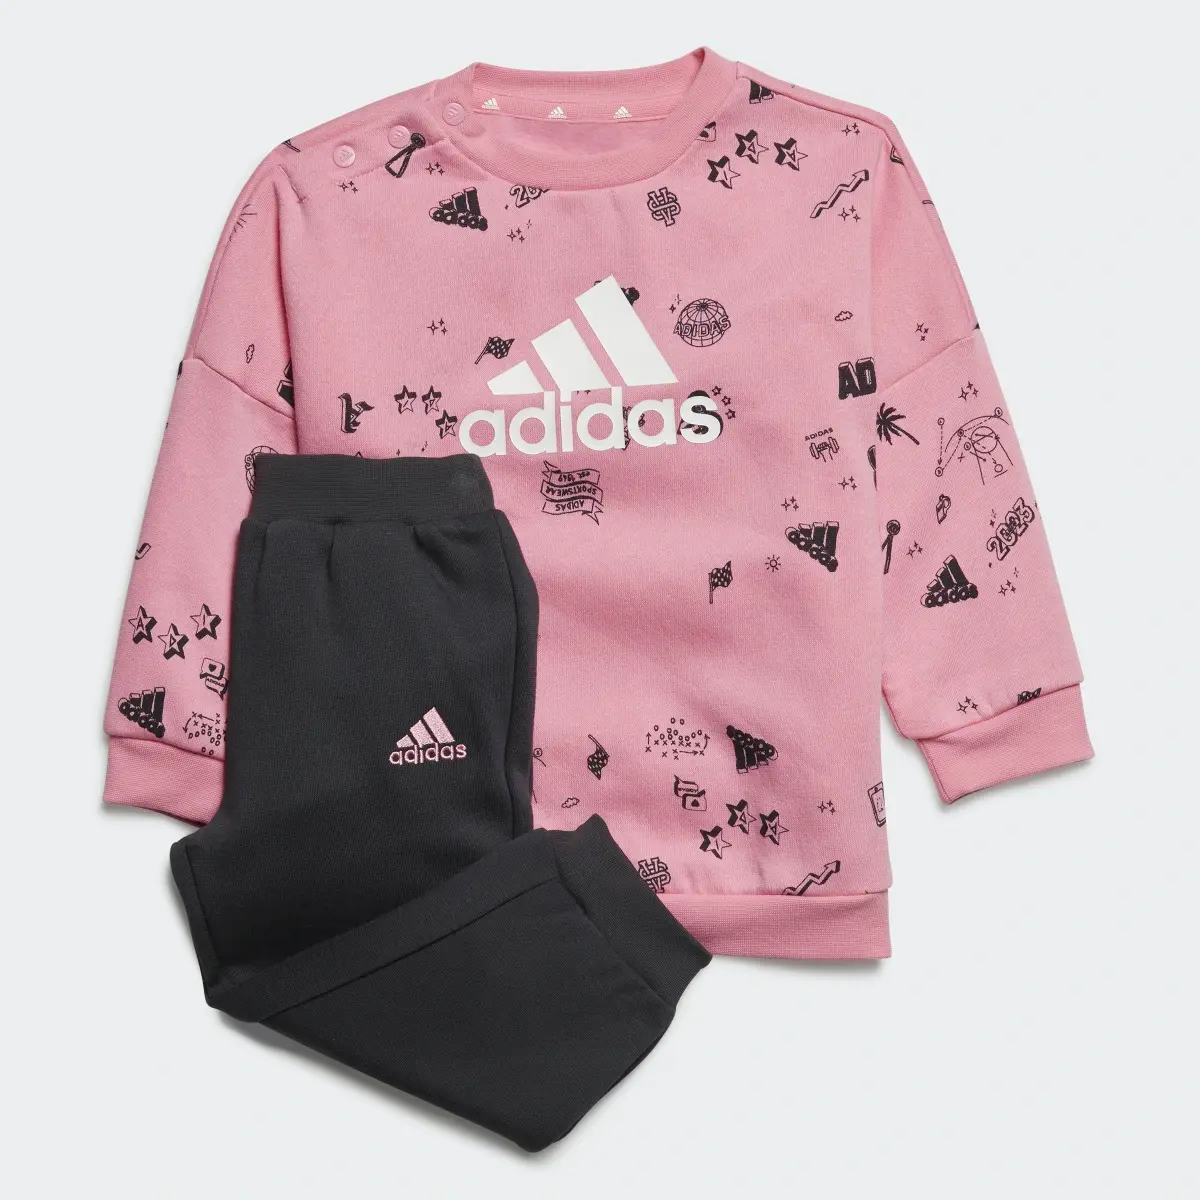 Adidas Completo Brand Love Crew Sweatshirt Infant. 2